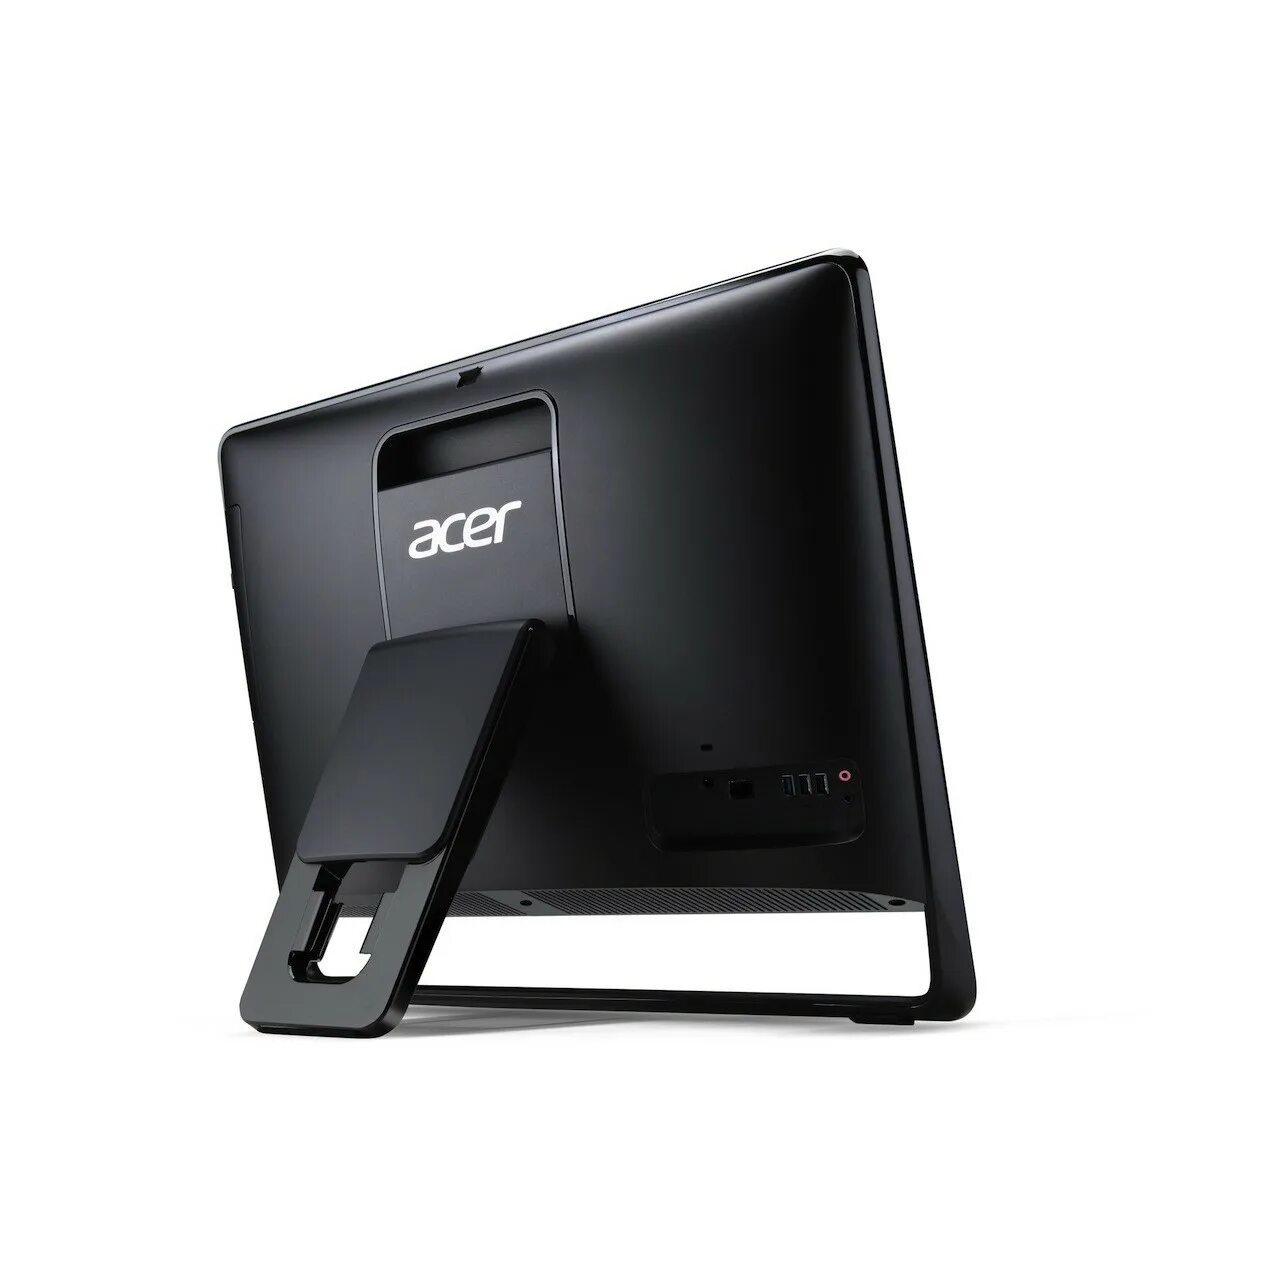 Acer Aspire ZC-605. Моноблок 19.5" Acer Aspire ZC-602. Acer моноблок Aspire ZC 605. Acer Aspire ZC-606.